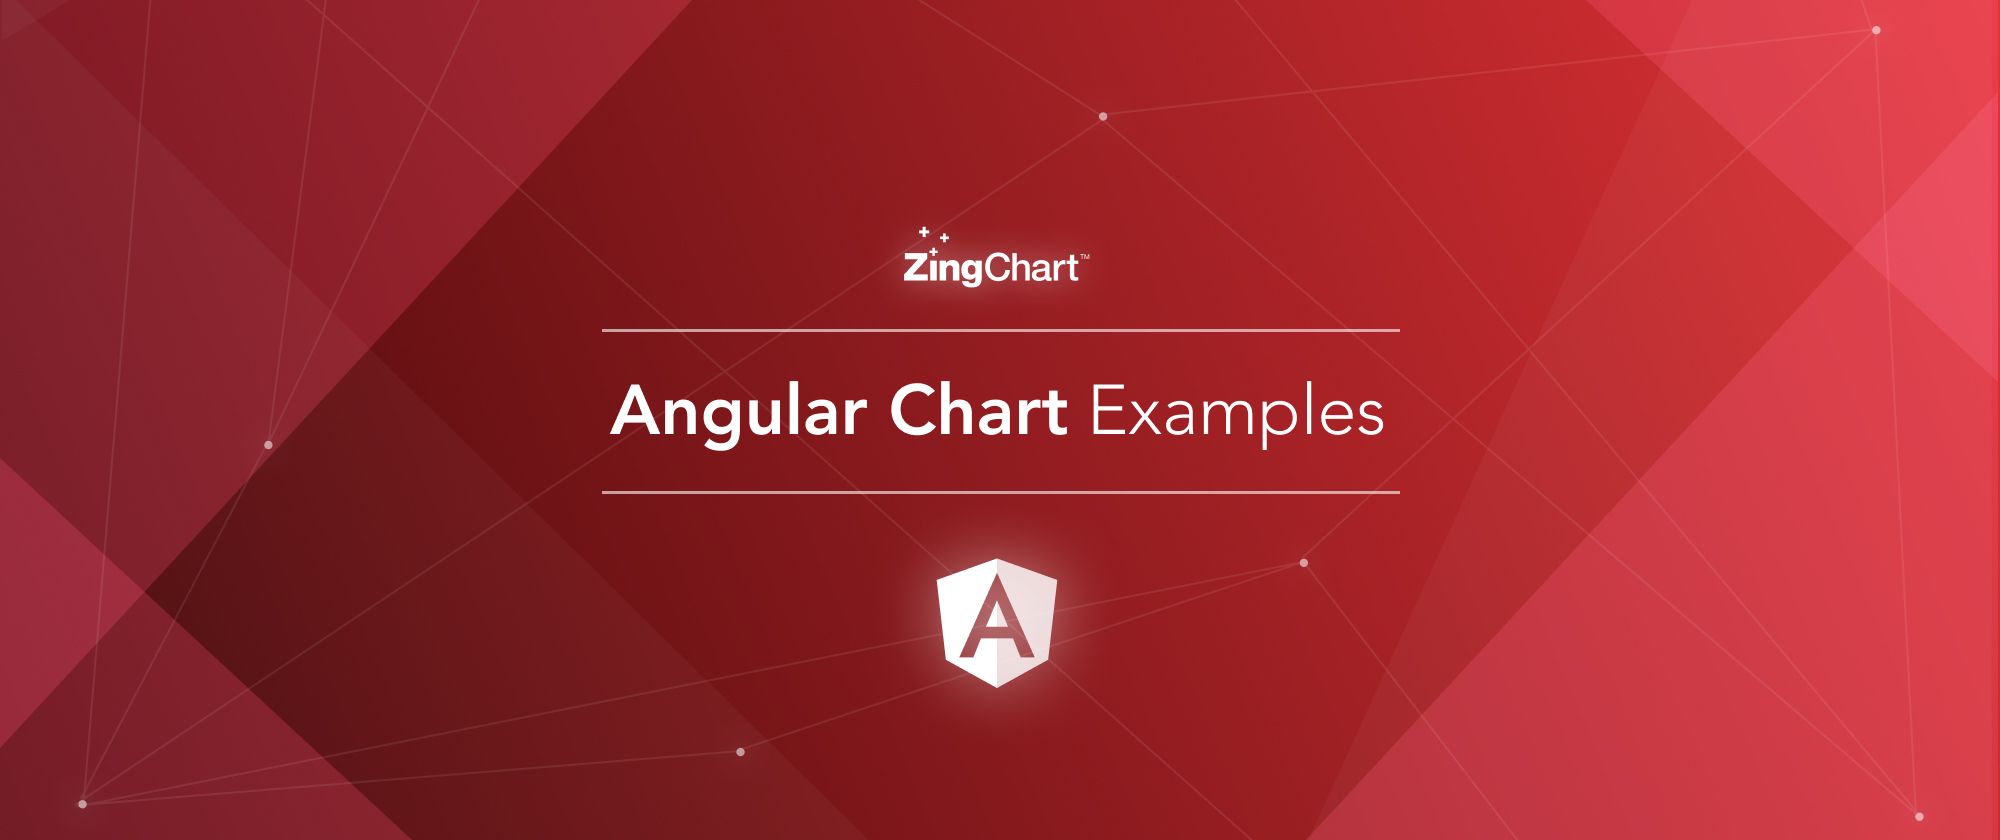 Angular Chart Examples